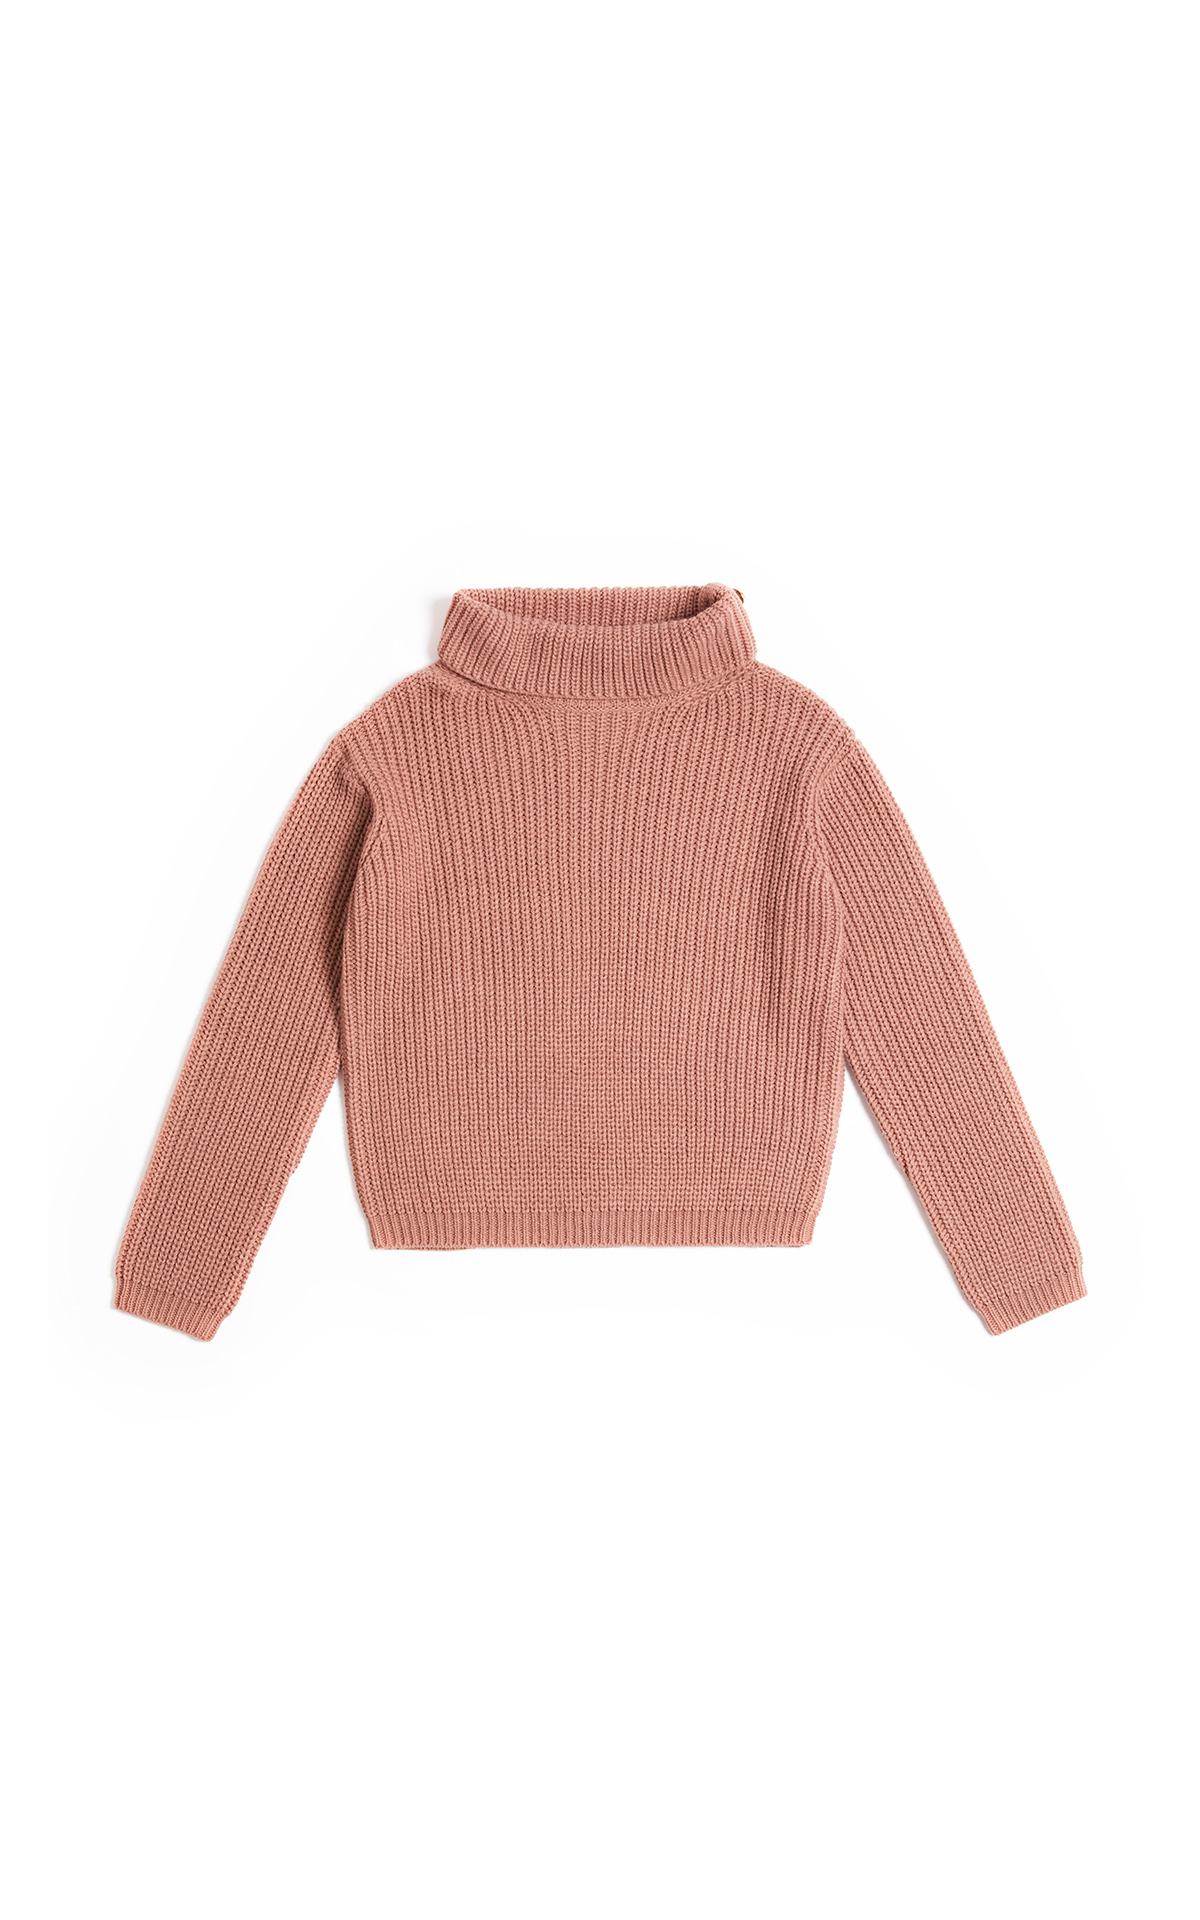 Guess pink knit sweater